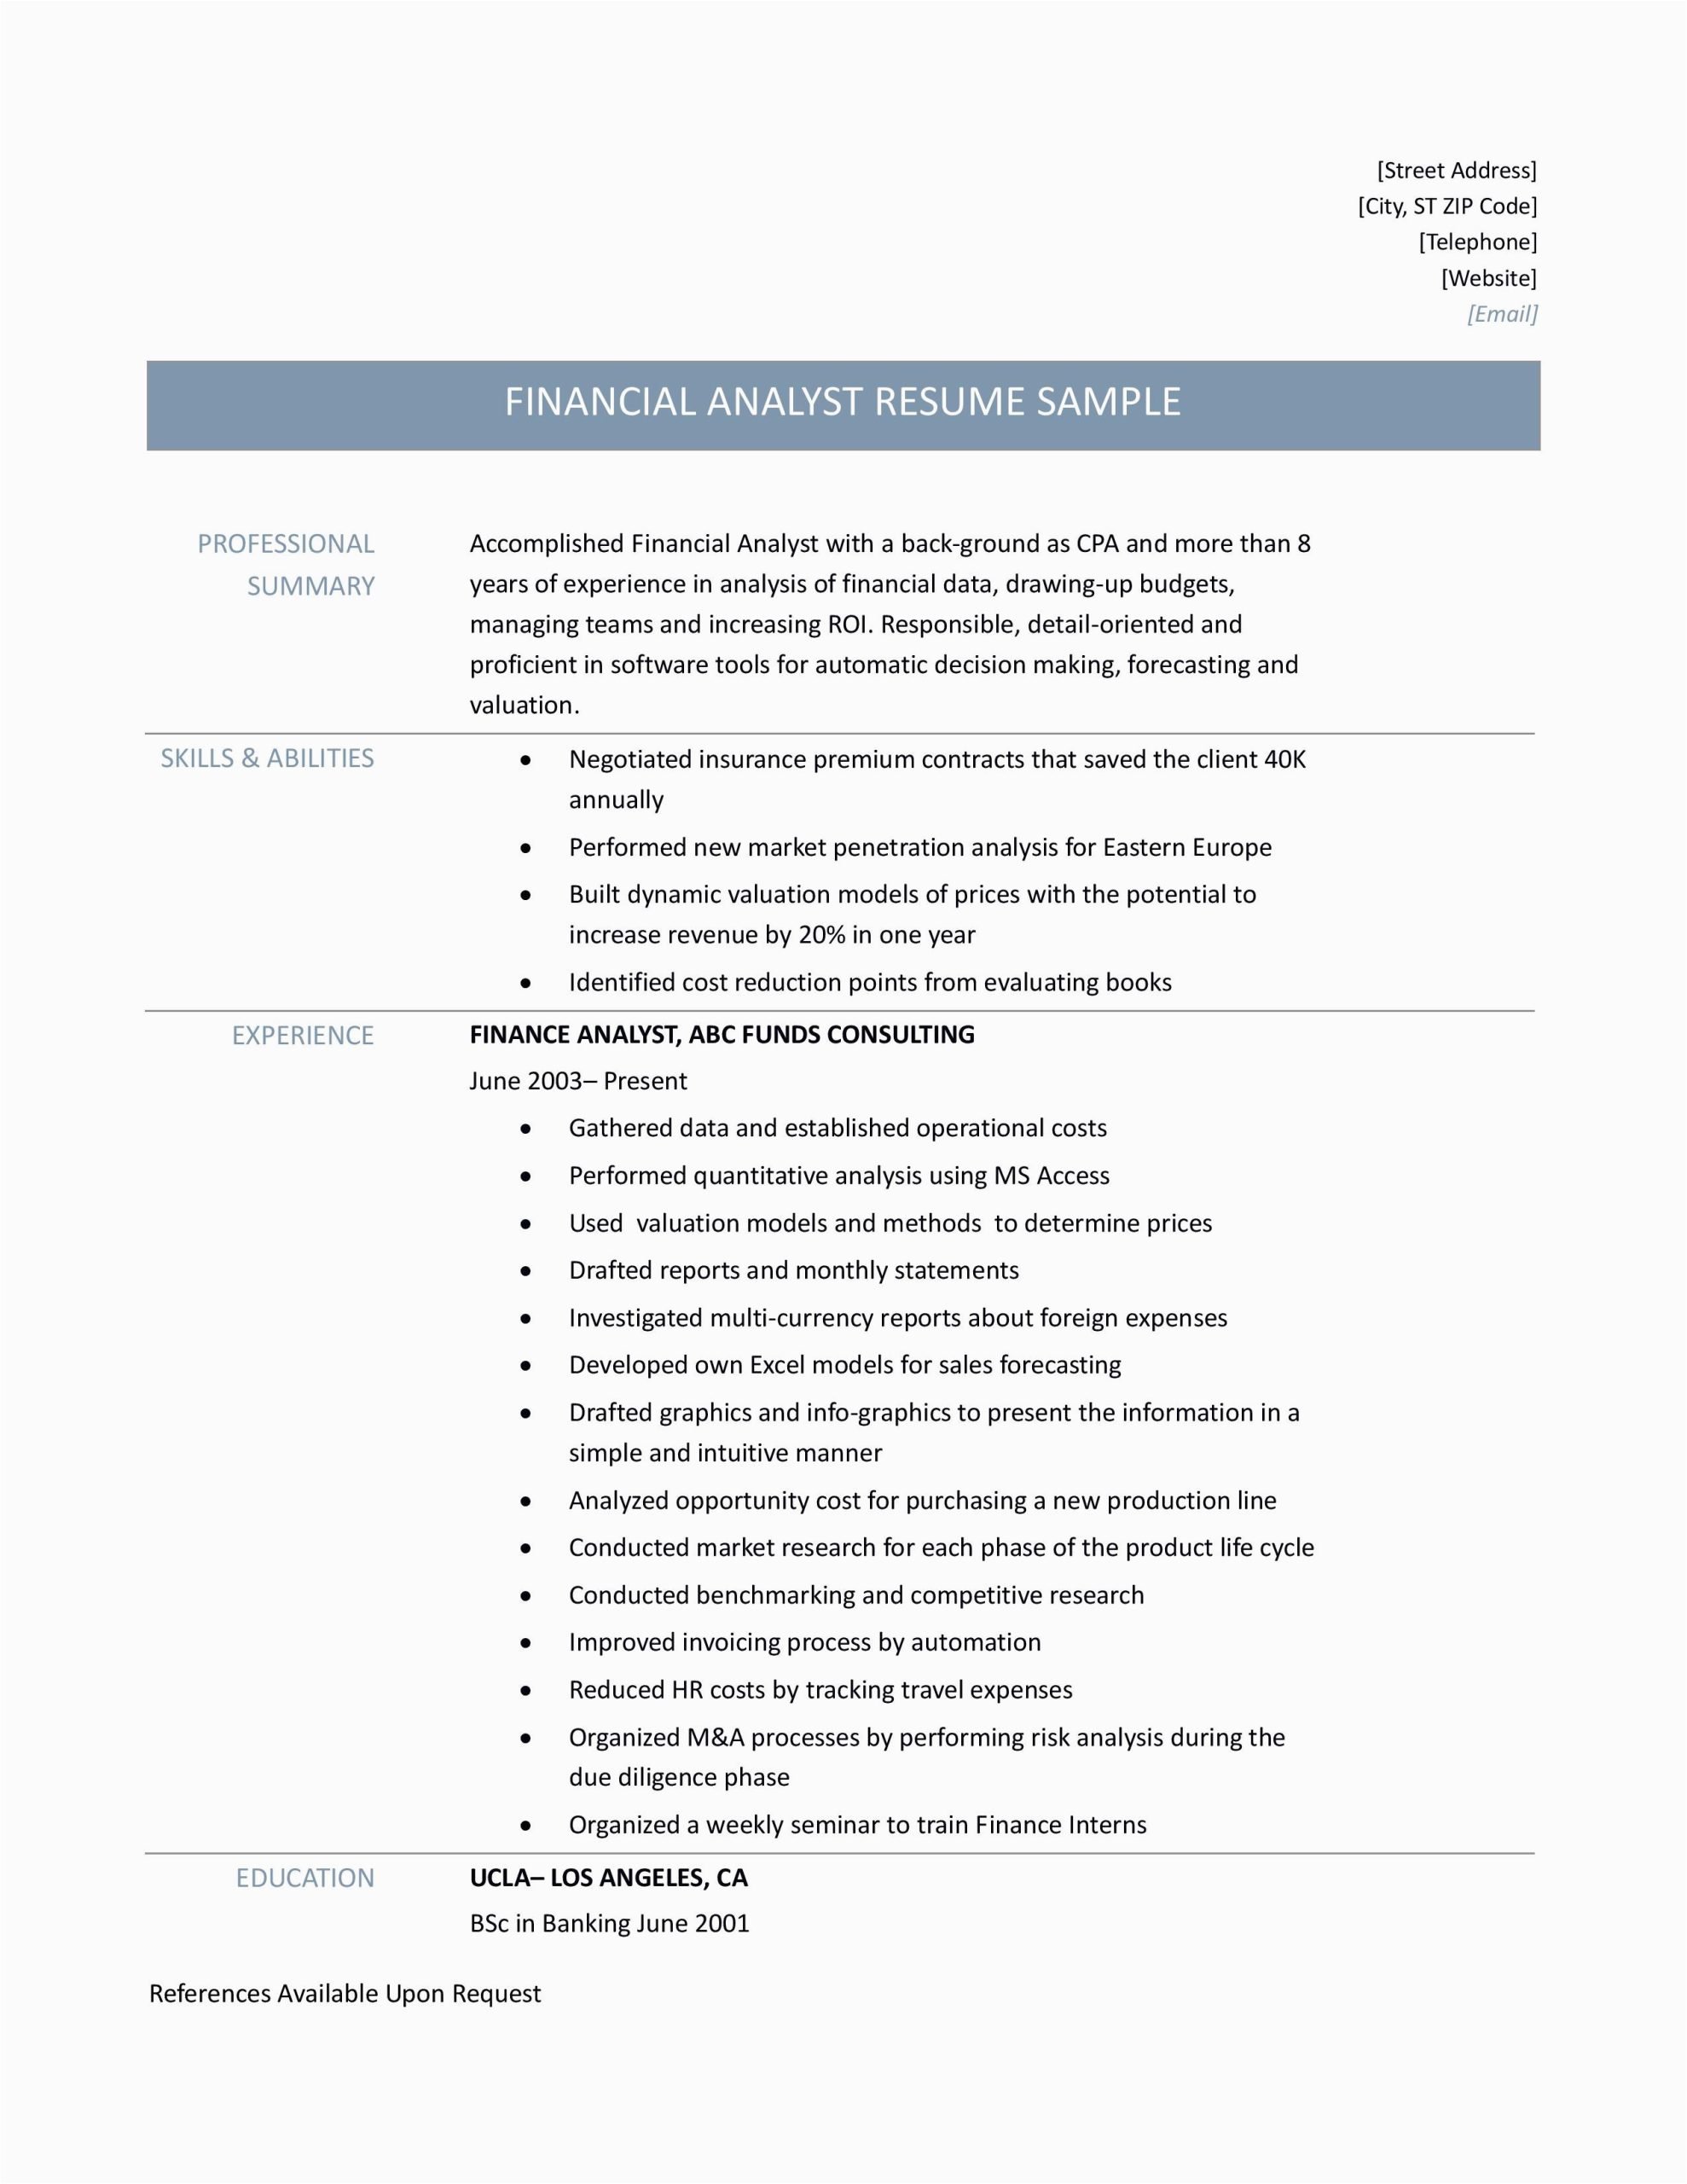 Financial Analyst Job Description Sample Resume Finance Analyst Resume Samples Tips and Templates